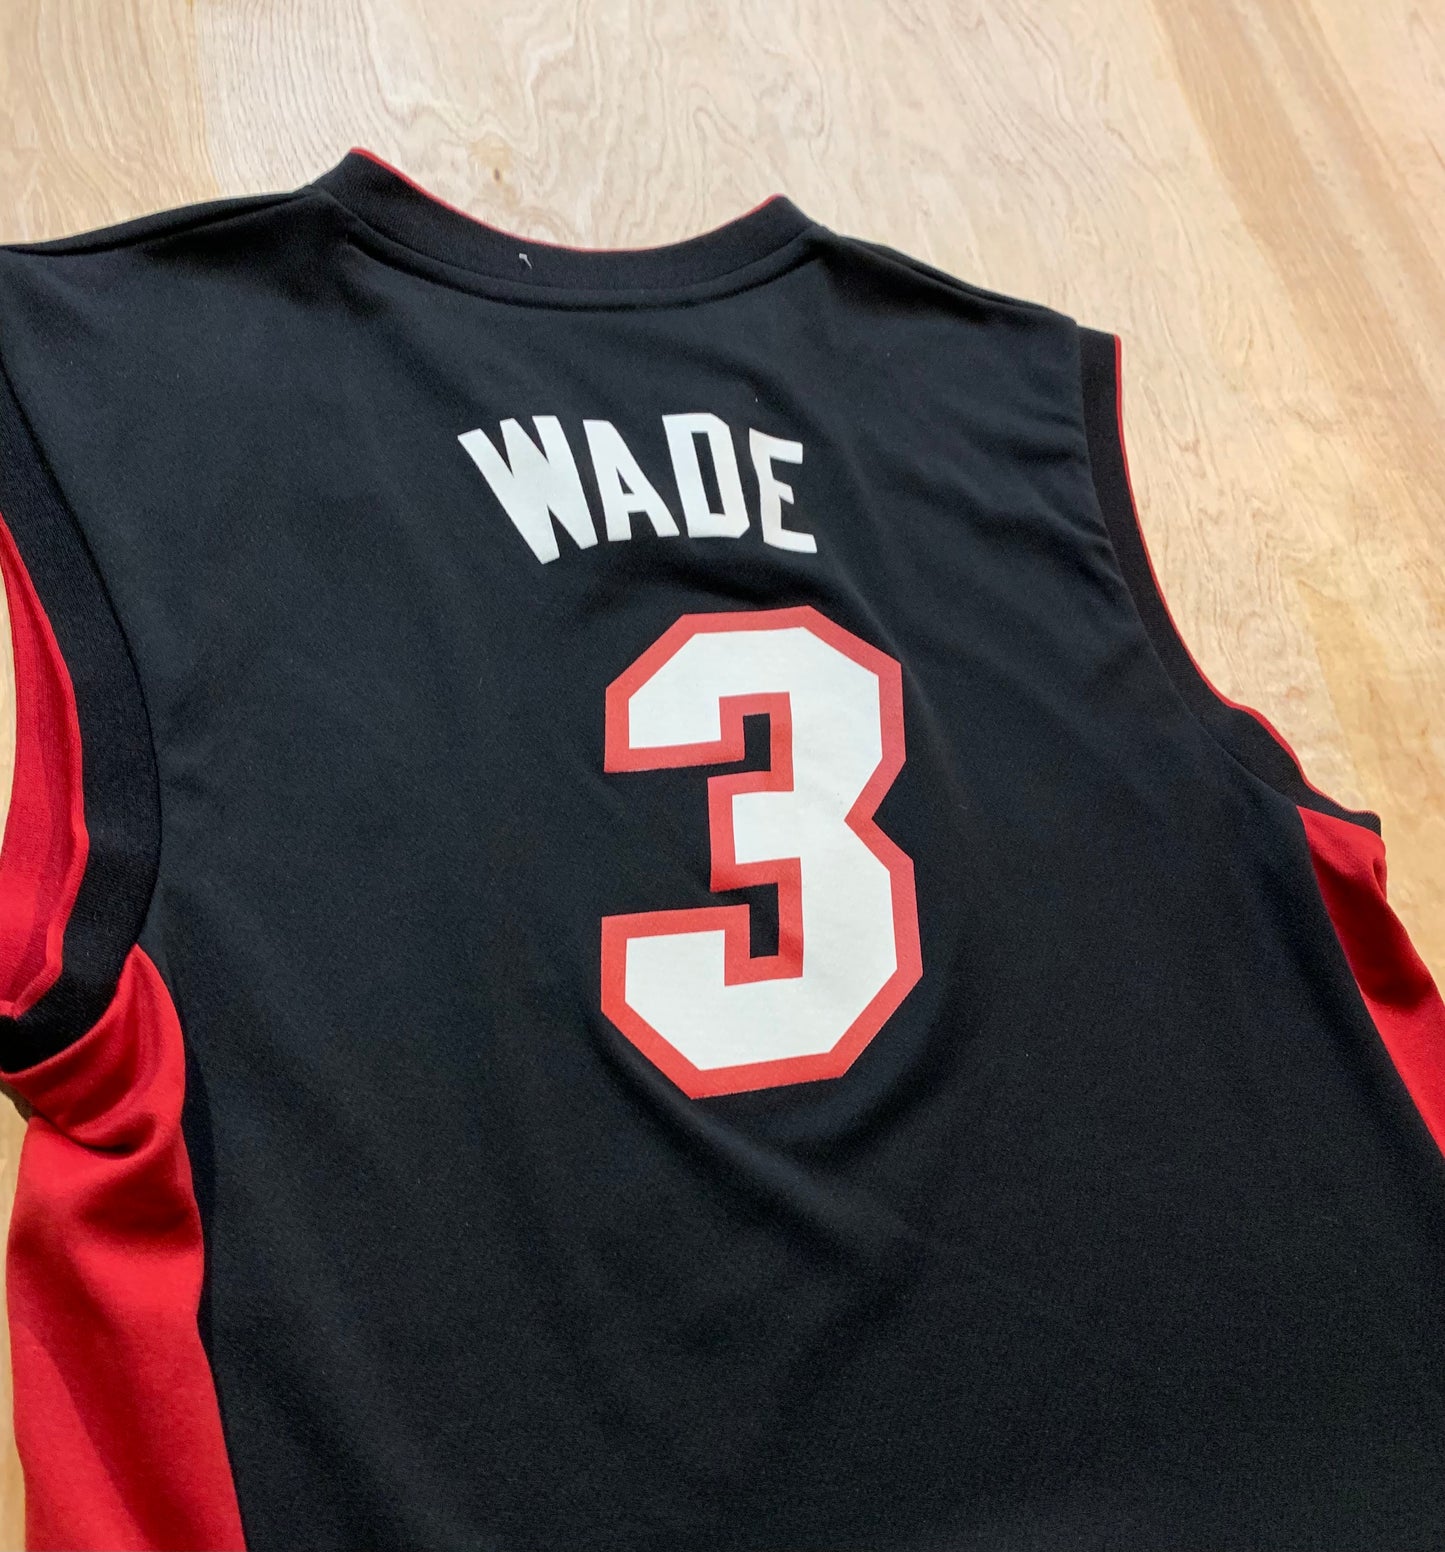 Dwayne Wade Miami Heat #3 Adidas